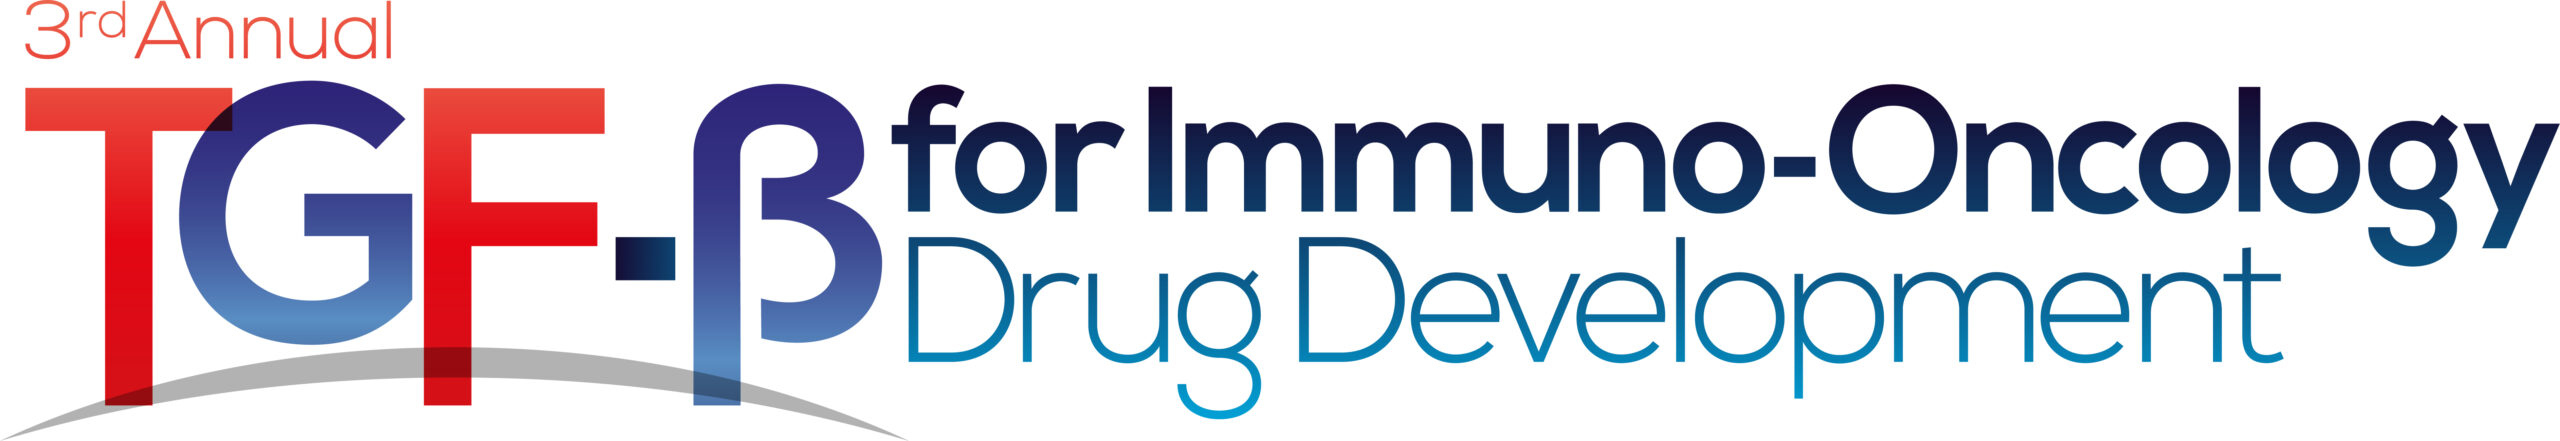 3rd TGF-β for Immuno-Oncology Logo